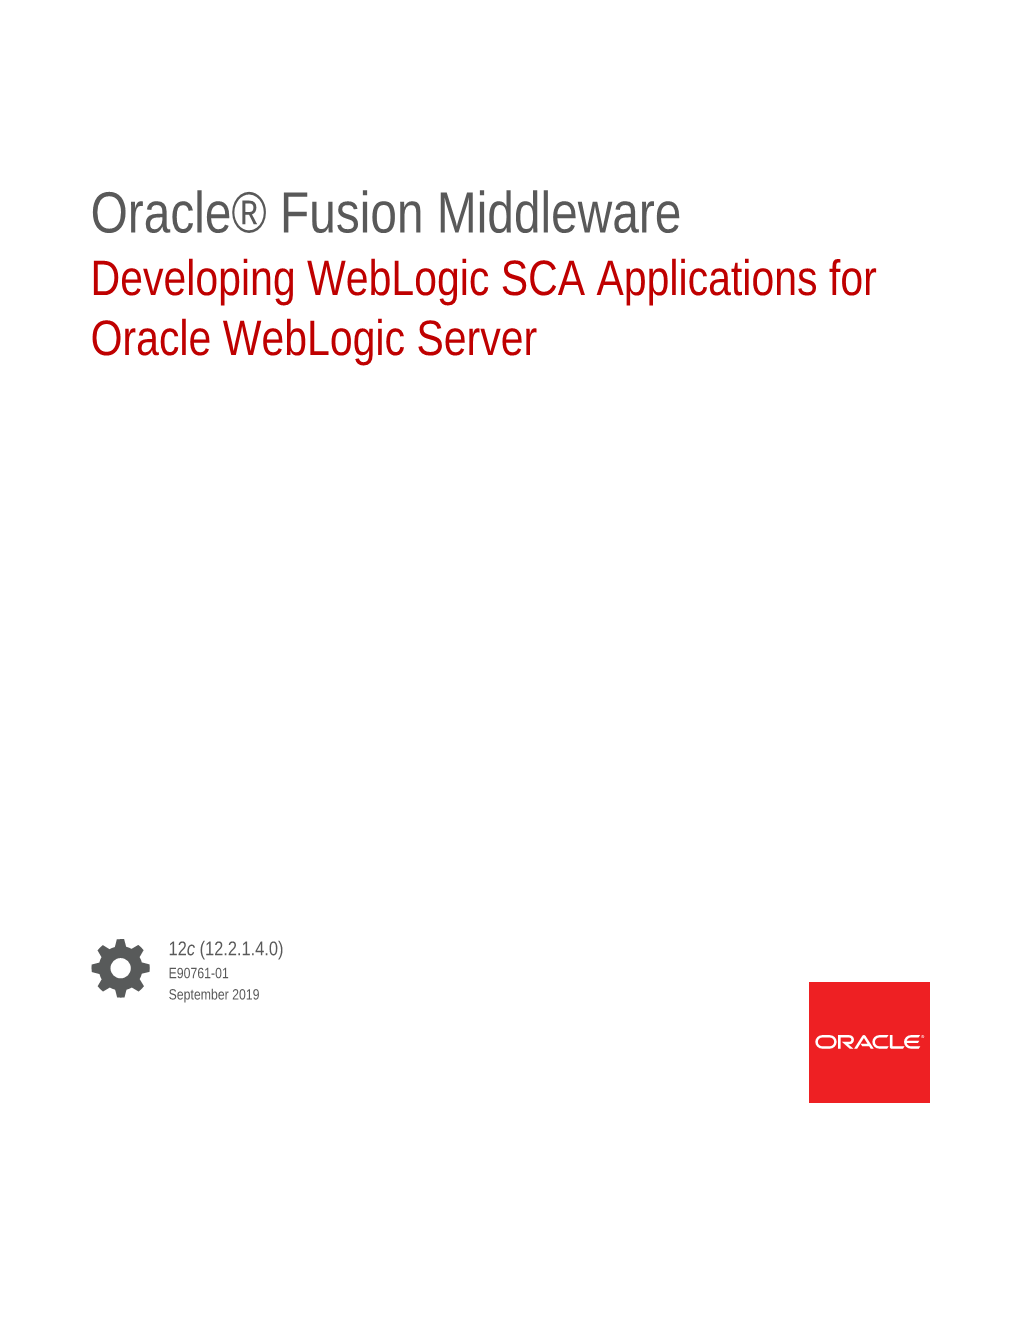 Developing Weblogic SCA Applications for Oracle Weblogic Server